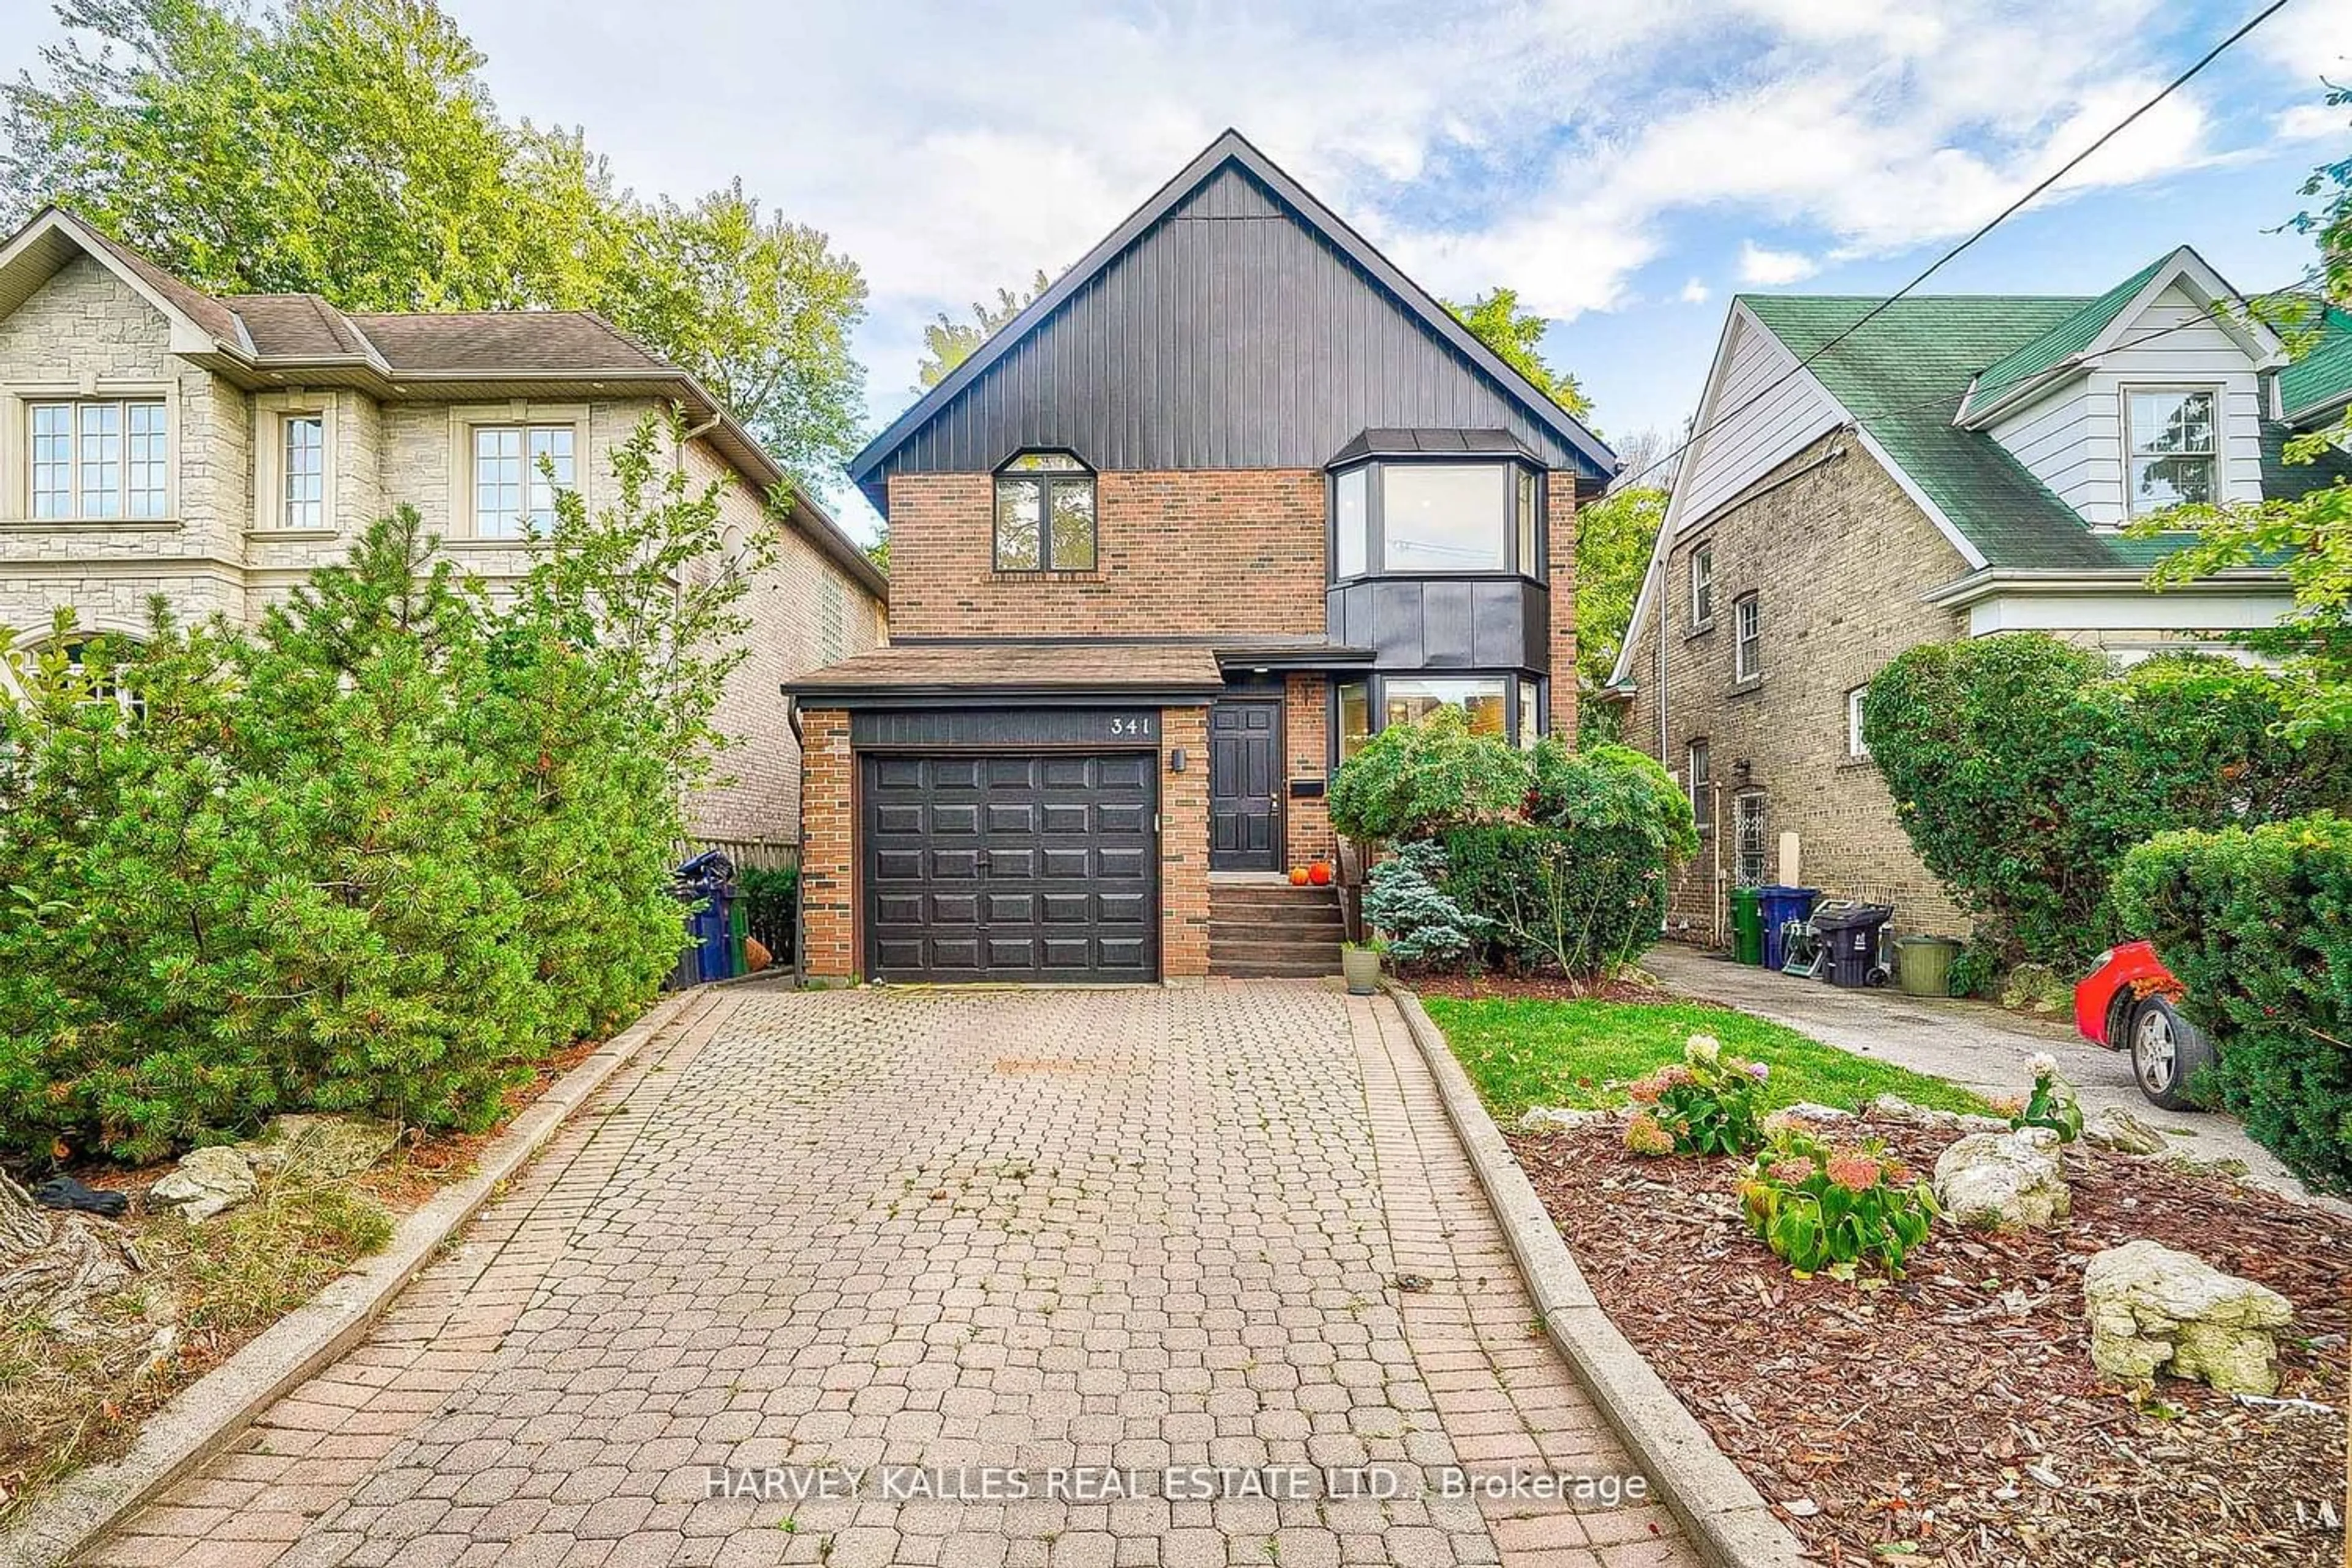 Home with brick exterior material for 341 Glengarry Ave, Toronto Ontario M5M 1E5